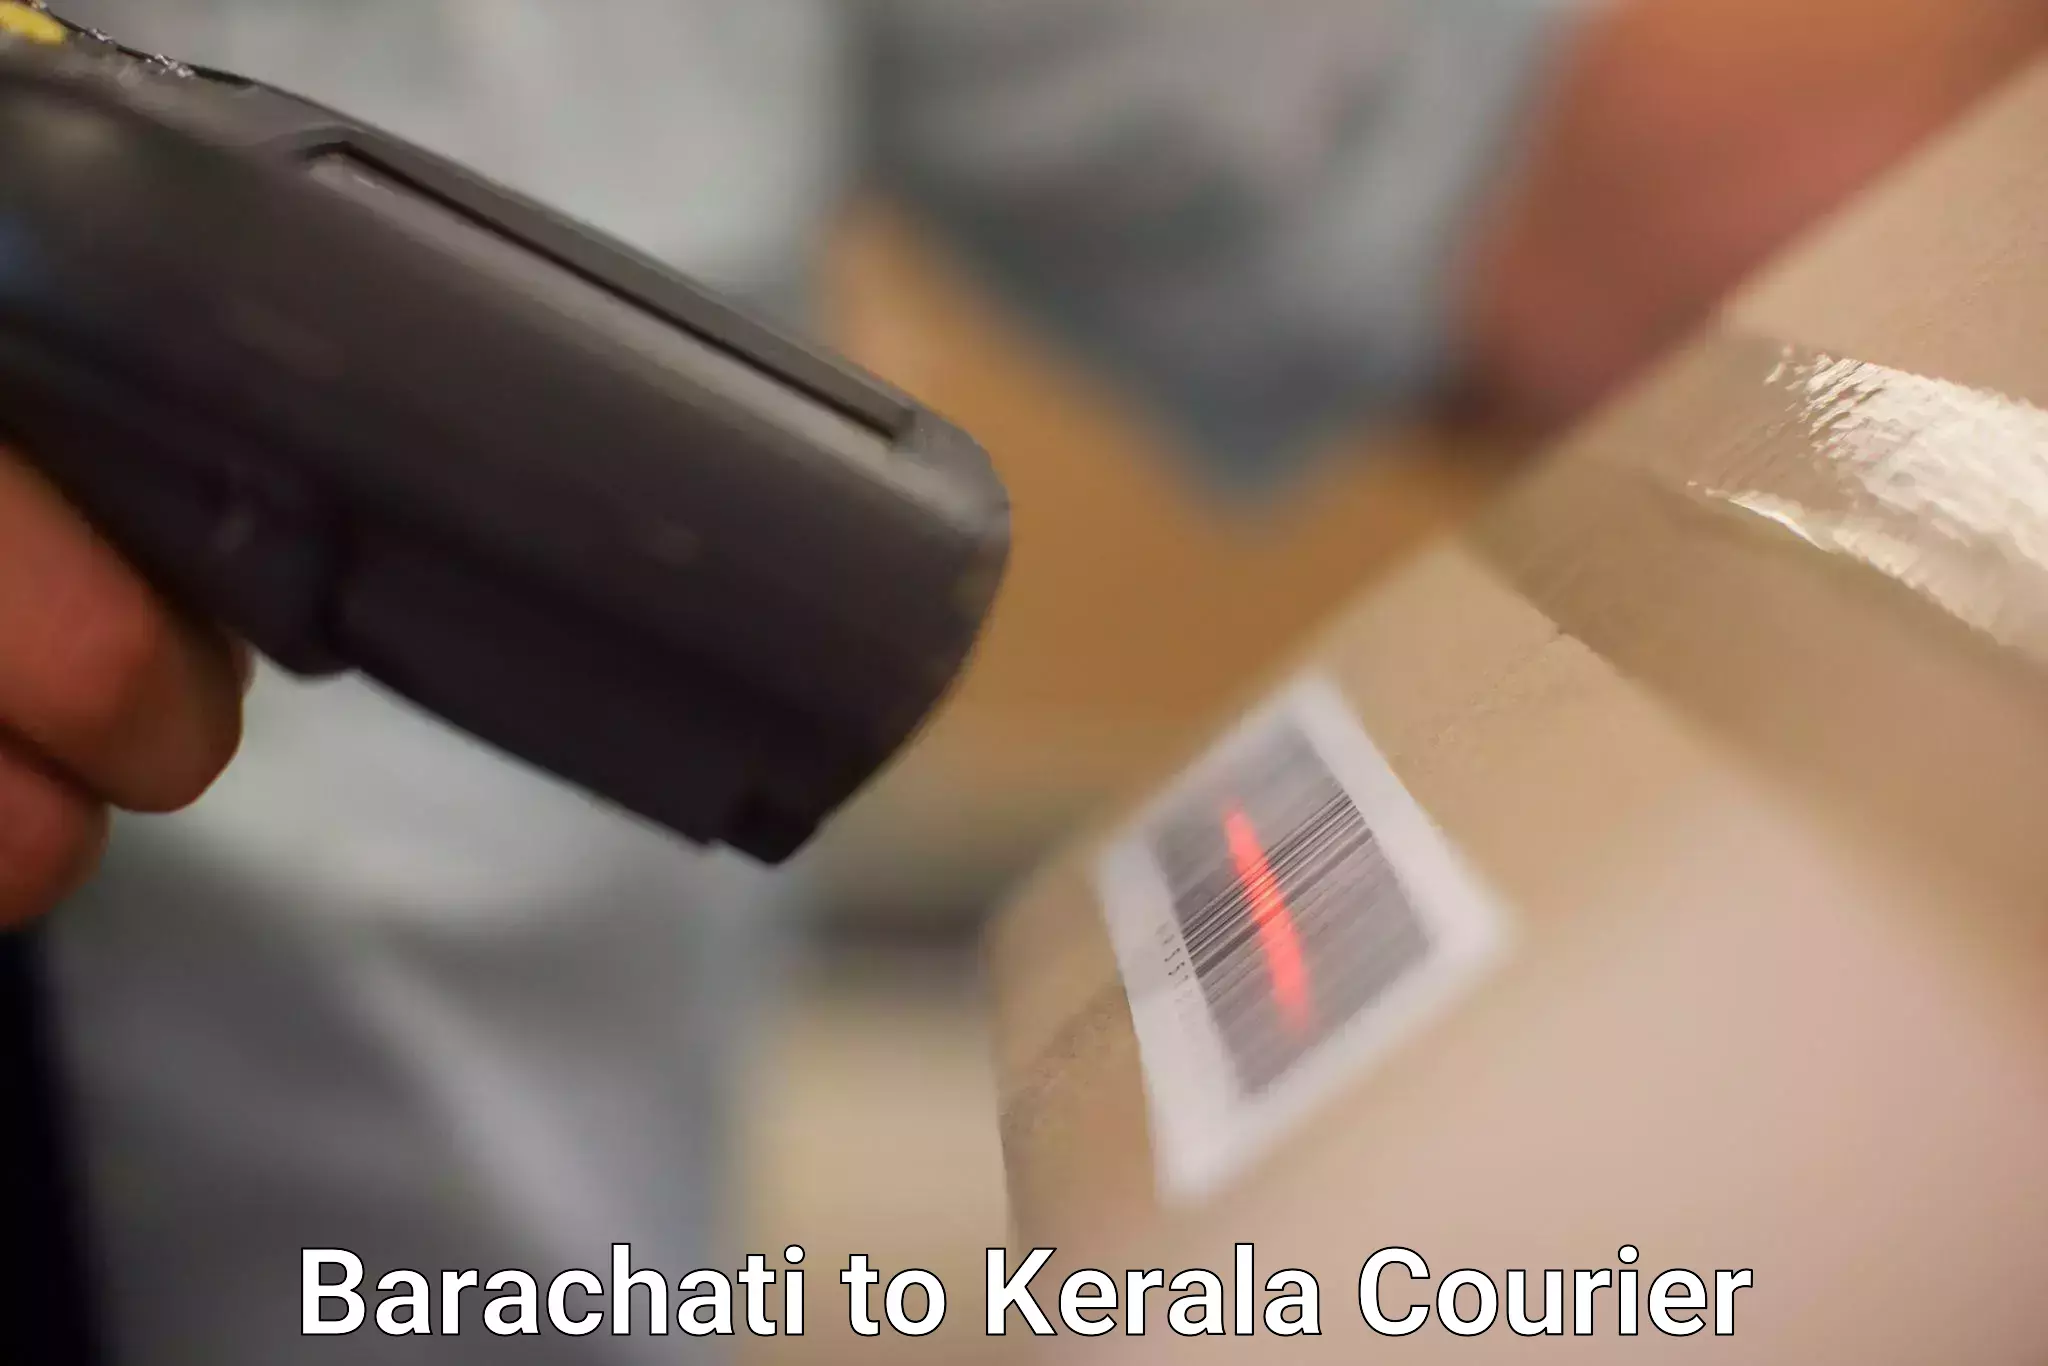 Professional courier handling Barachati to Kanhangad